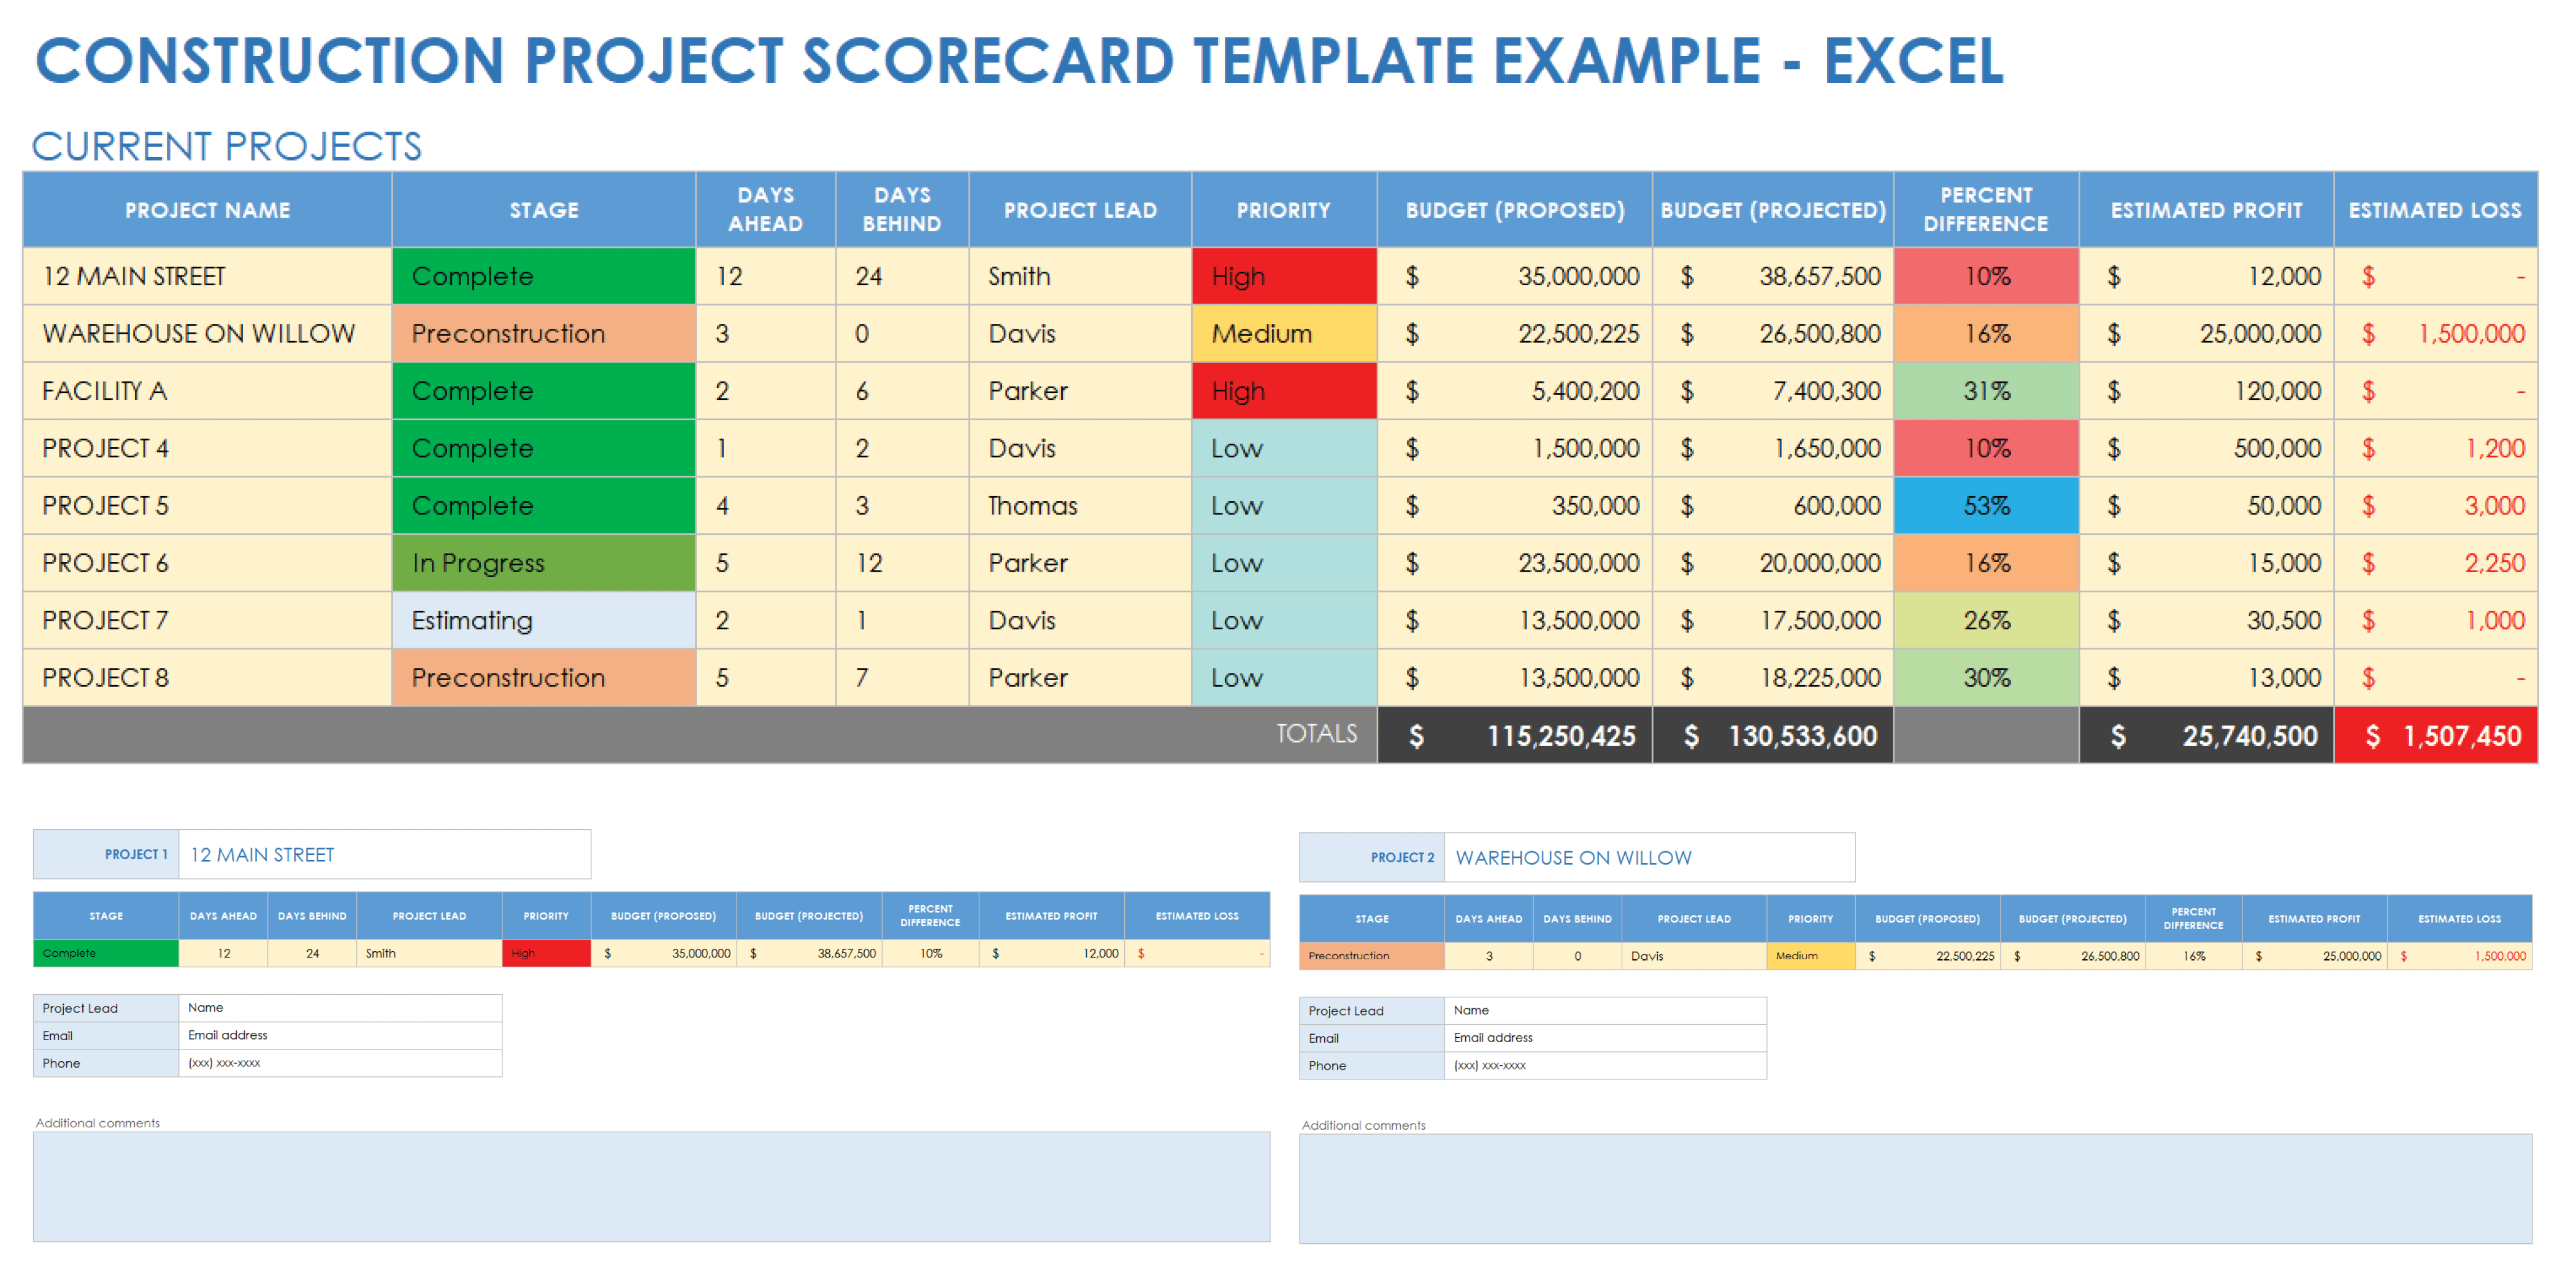 Project Scorecard Template Excel